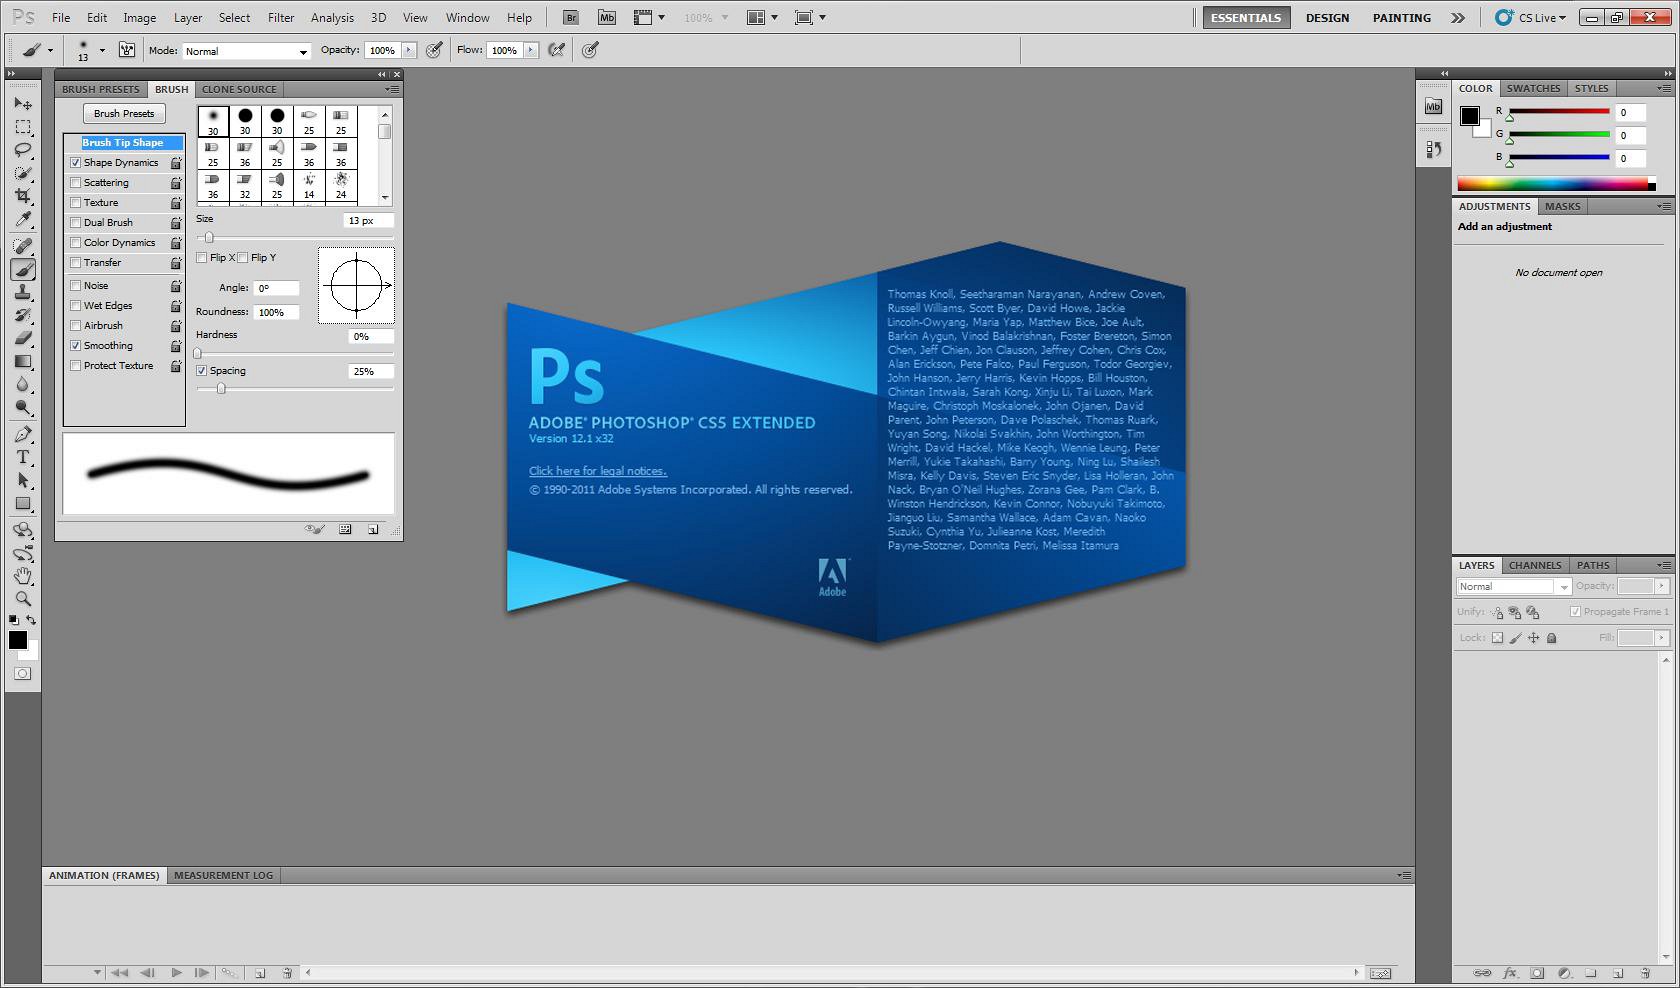 Adobe Photoshop CS5 for Windows Splash Screen (2010)